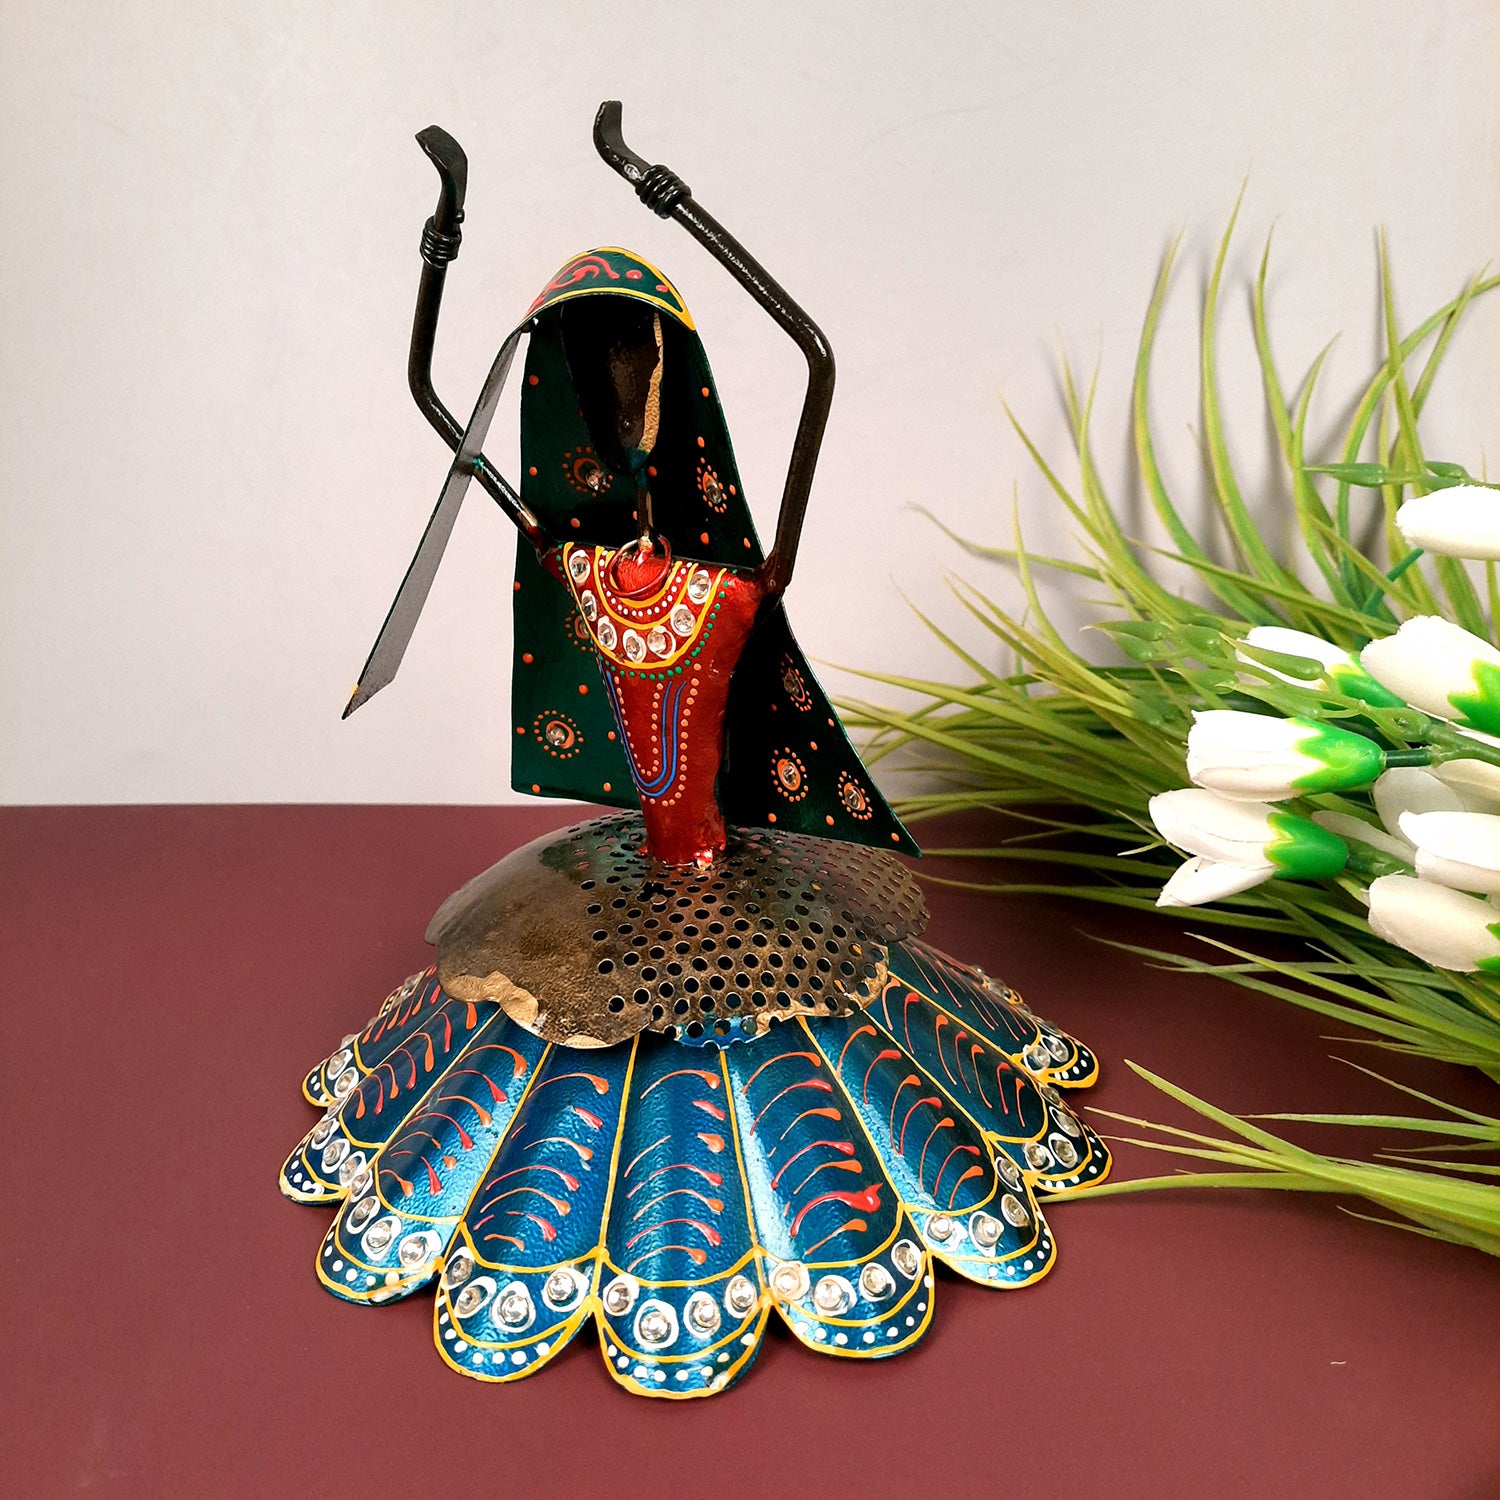 Decorative Showpiece Village Girl Dancing Design | Figurine for Home, Living Room, TV unit & Bedroom | Show Piece For Office Desk & Gifts - 9 Inch